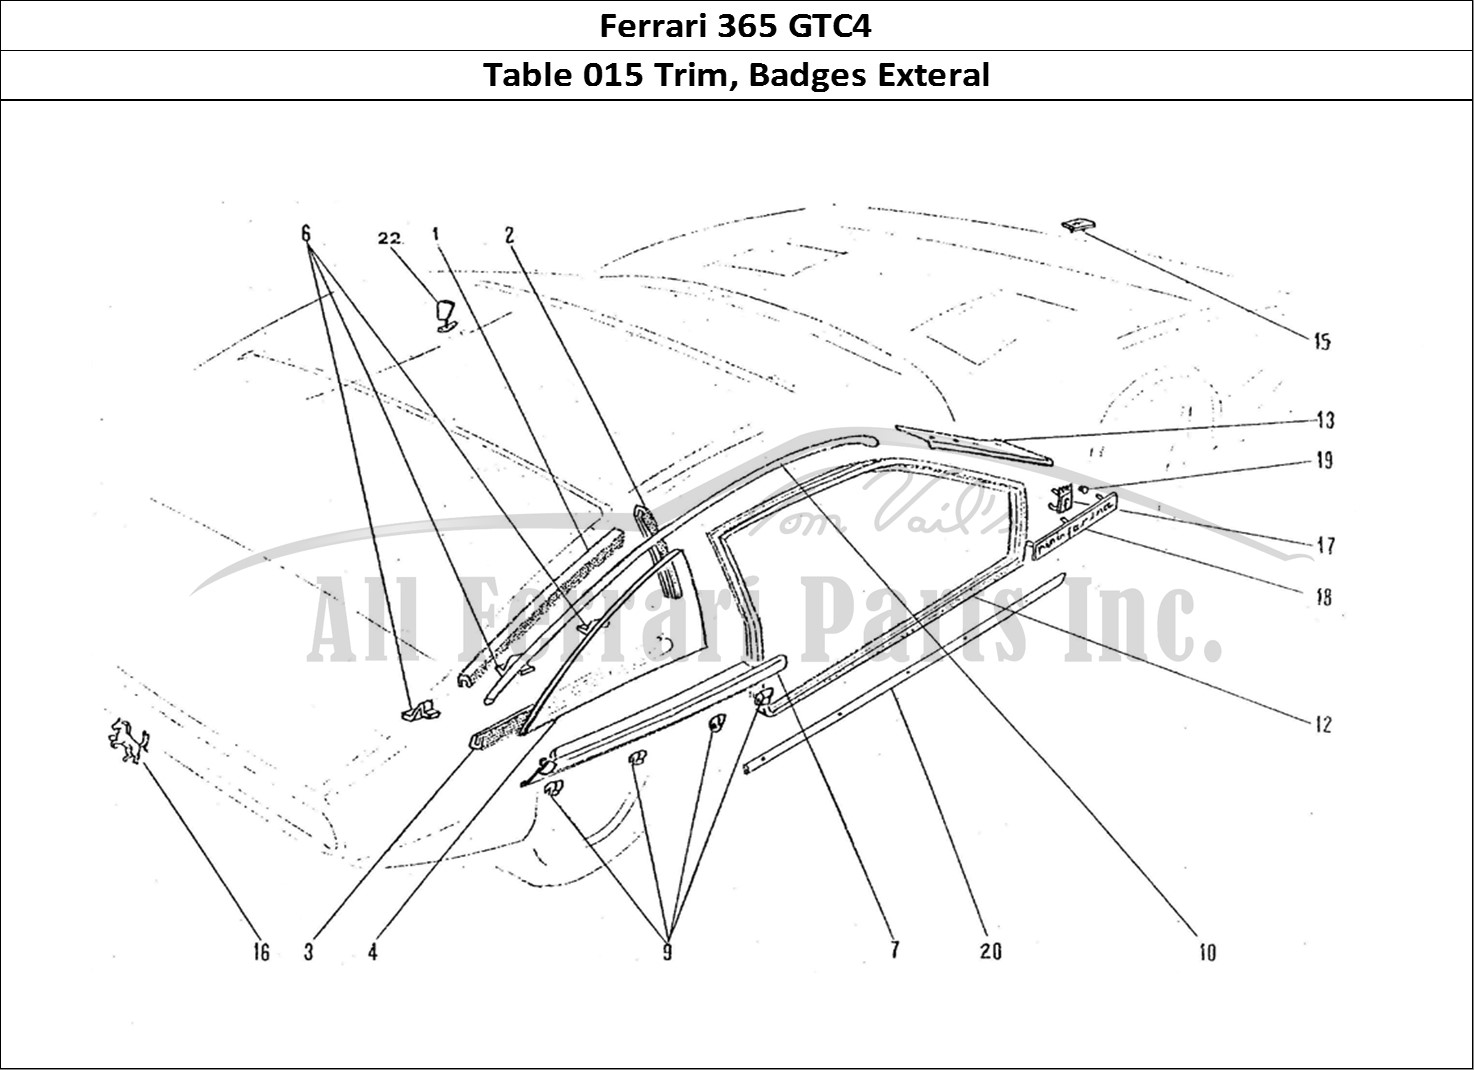 Ferrari Parts Ferrari 365 GTC4 (Coachwork) Page 015 External Finishings & Out